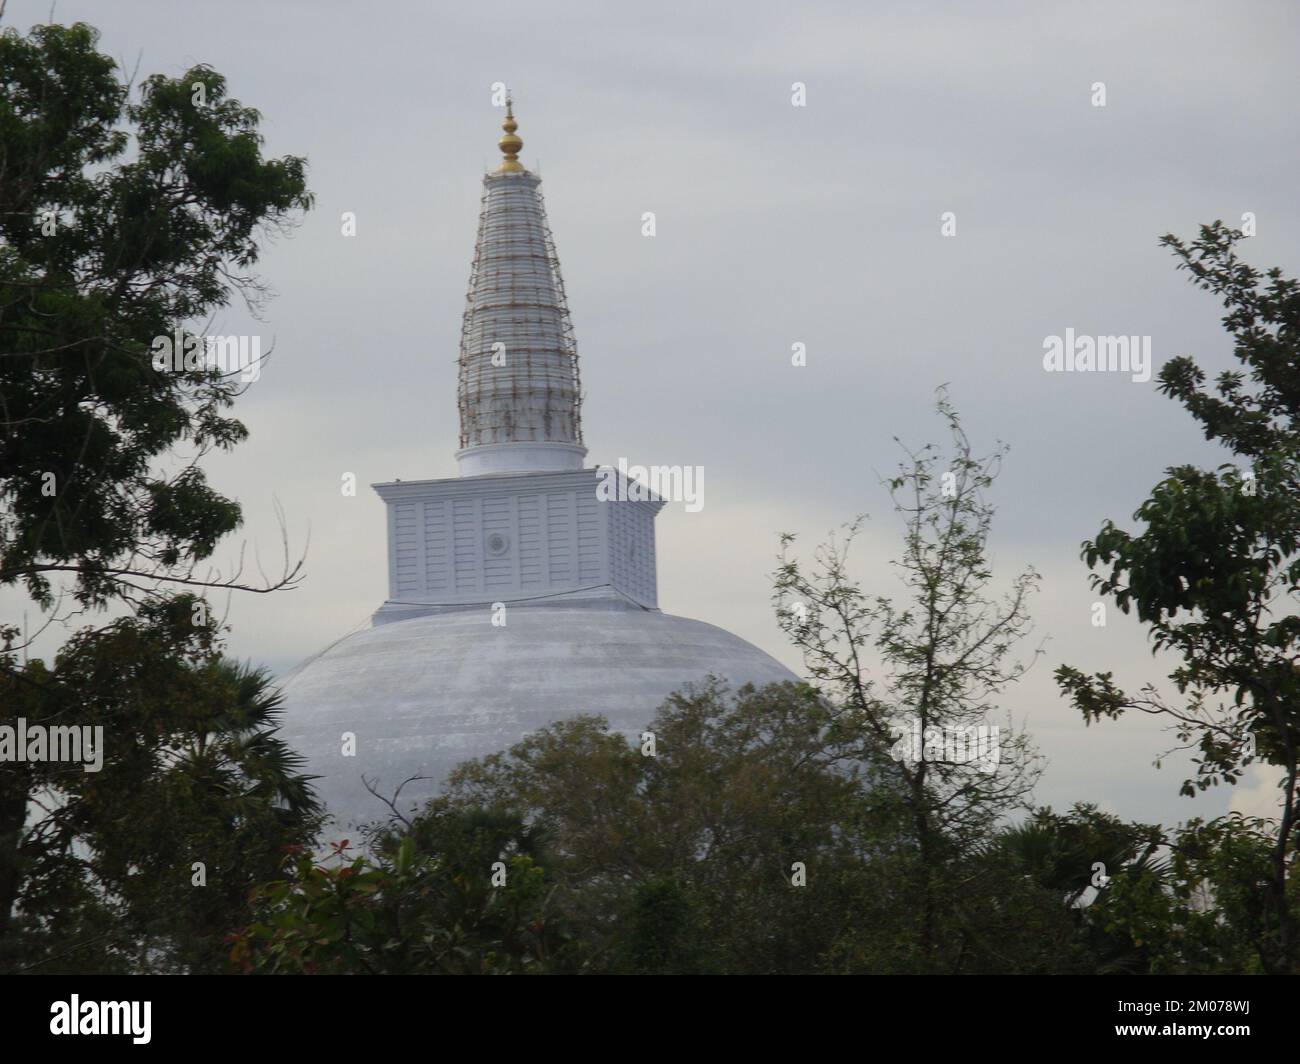 The Ruwanweli Maha Seya, also known as the Mahathupa, is a stupa in Anuradhapura, Sri Lanka. Stock Photo